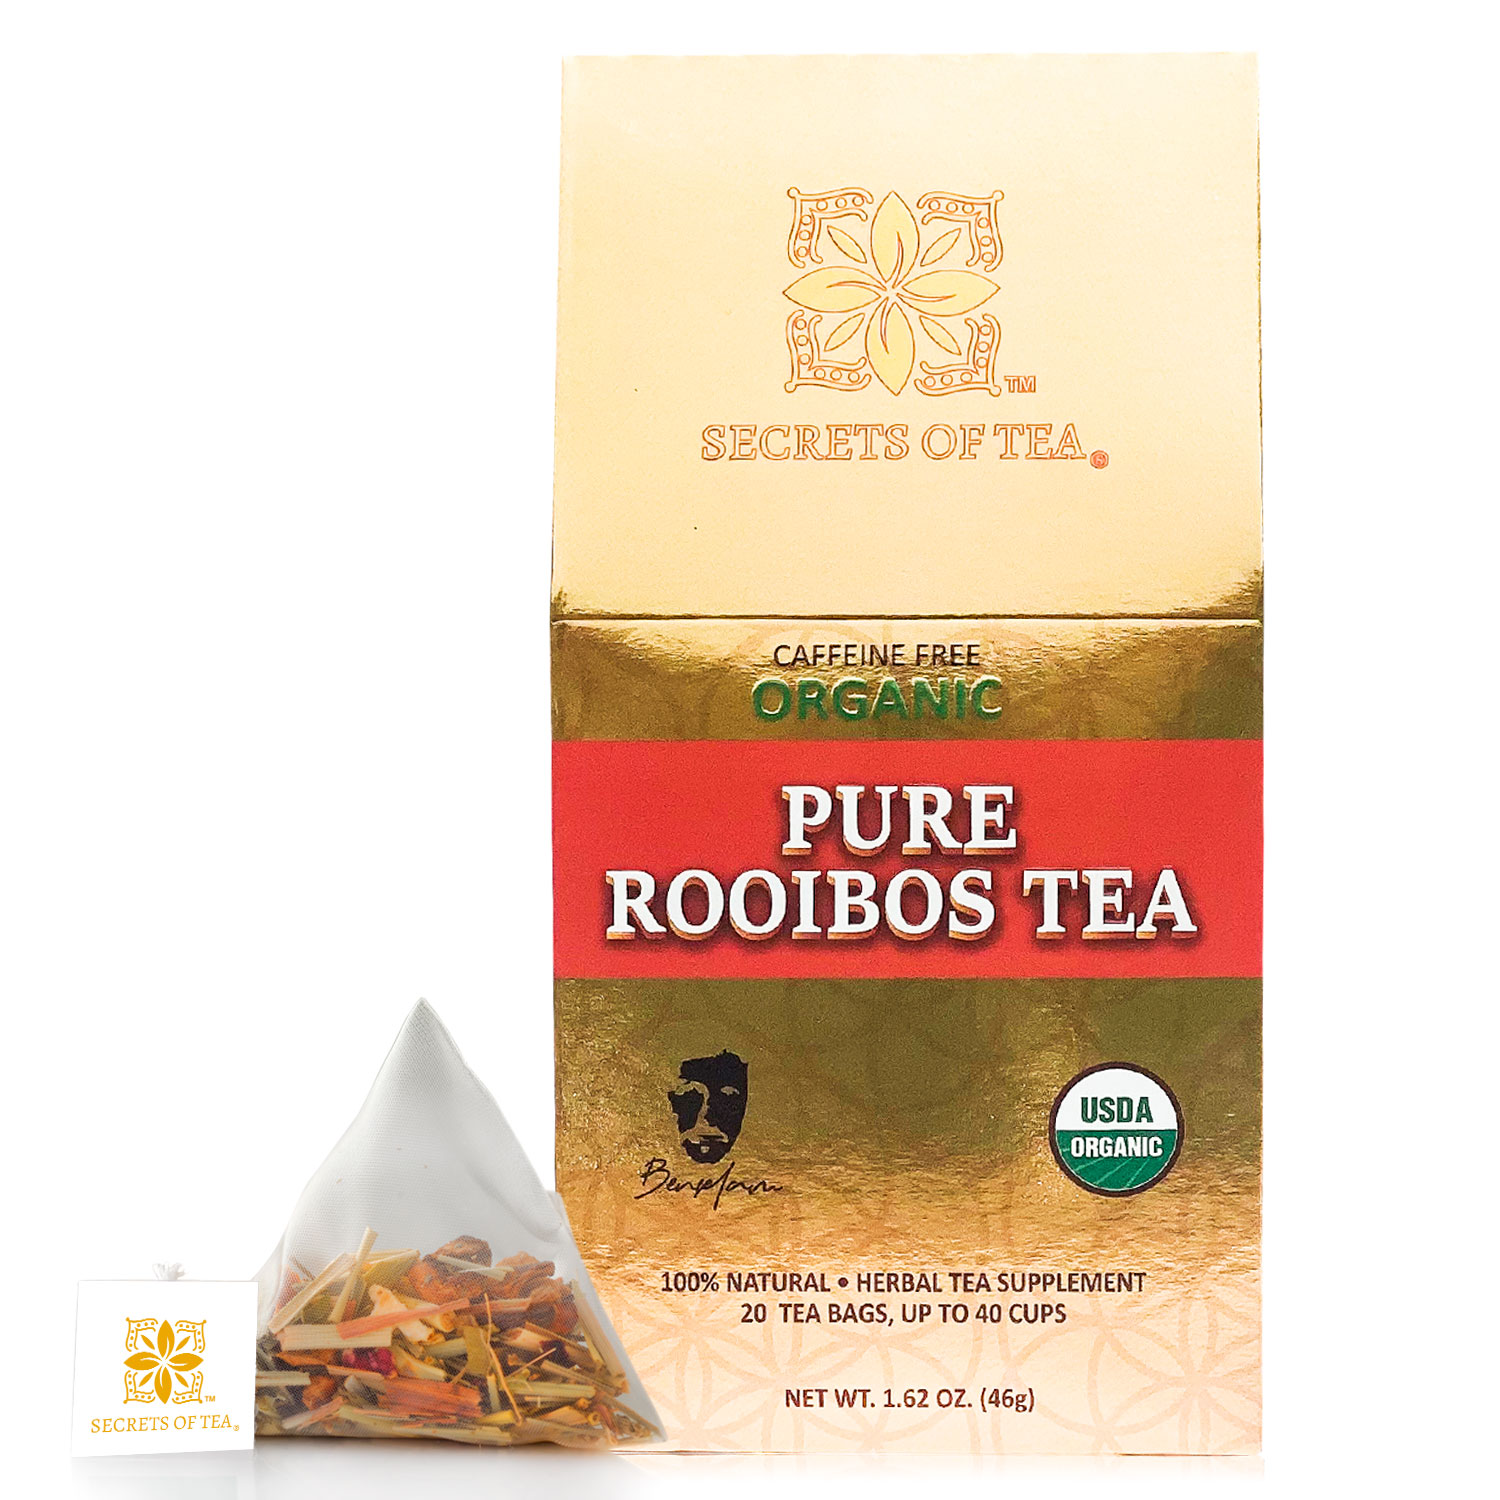 Secrets of Tea Pure Rooibos Tea 2 innerpacks per case 2.0 oz